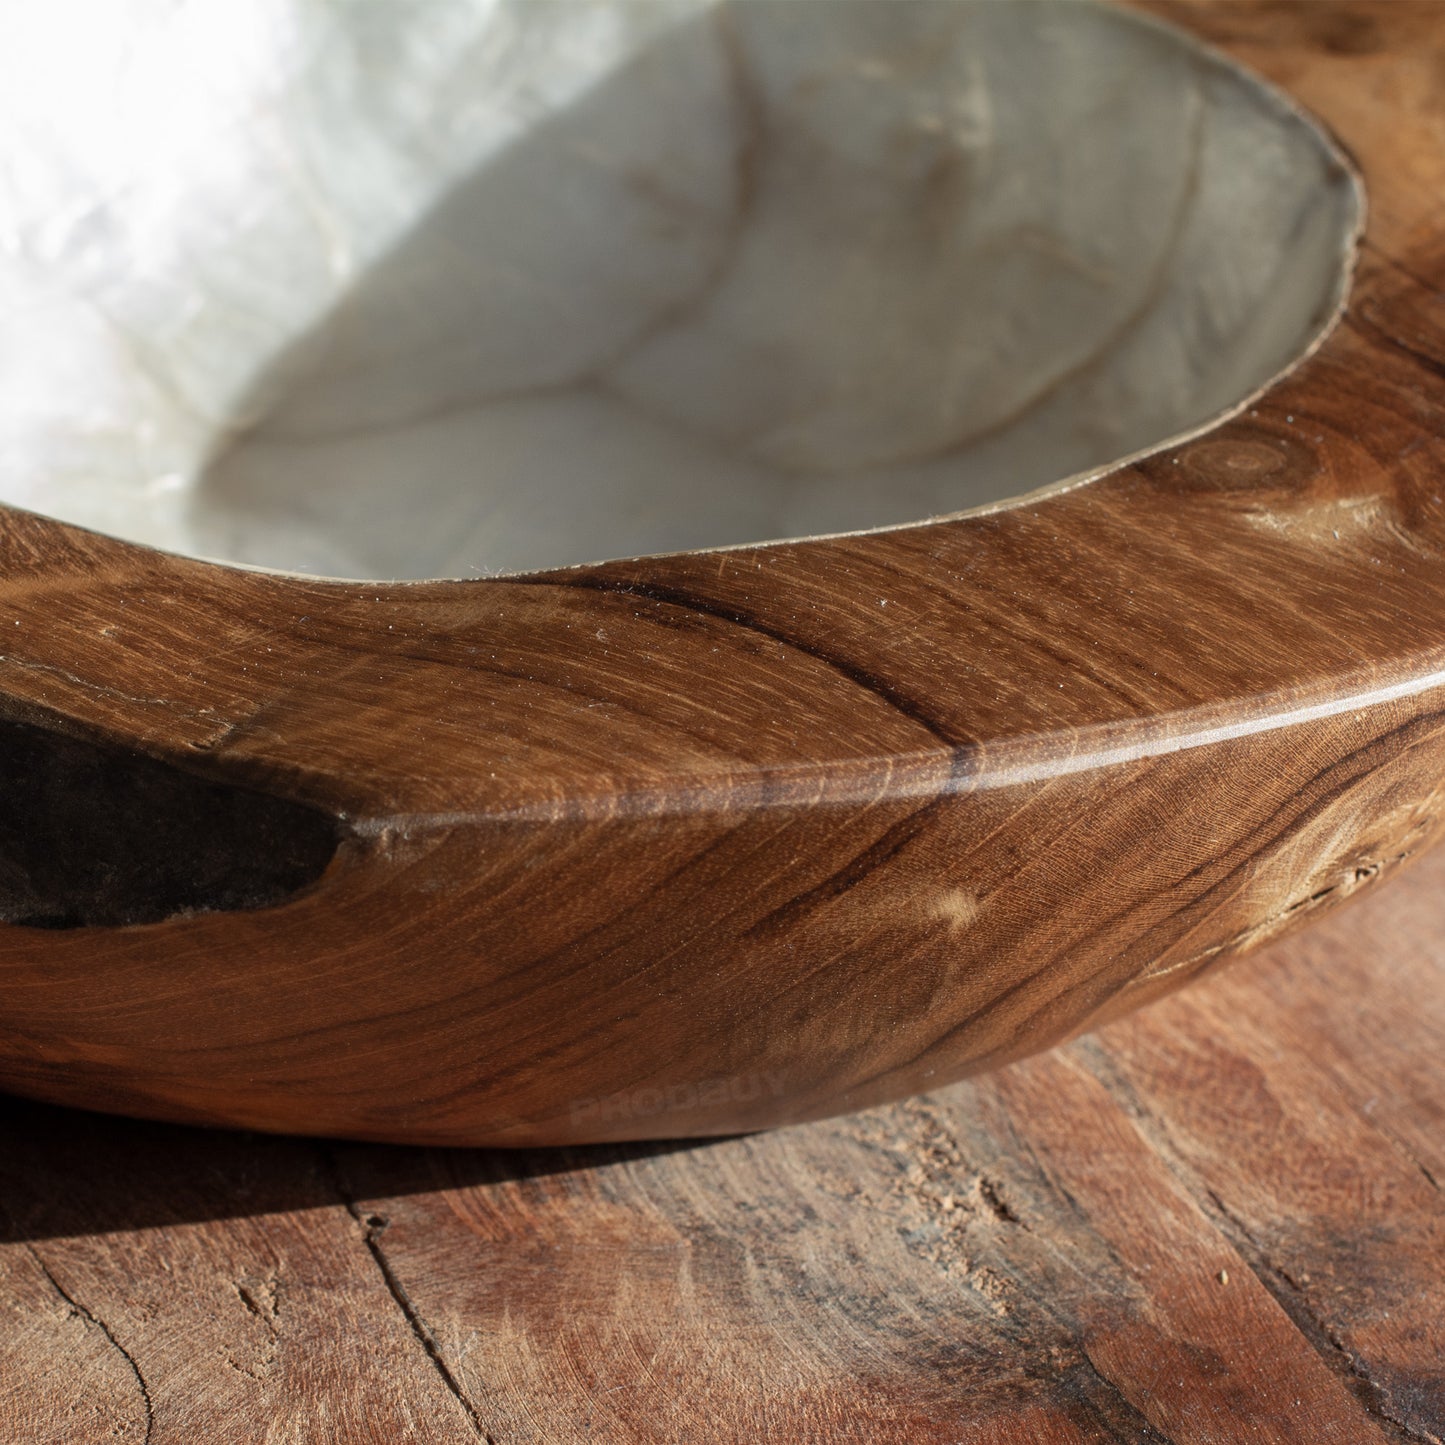 Pearl & Teak Root Wood Display Bowl 25cm